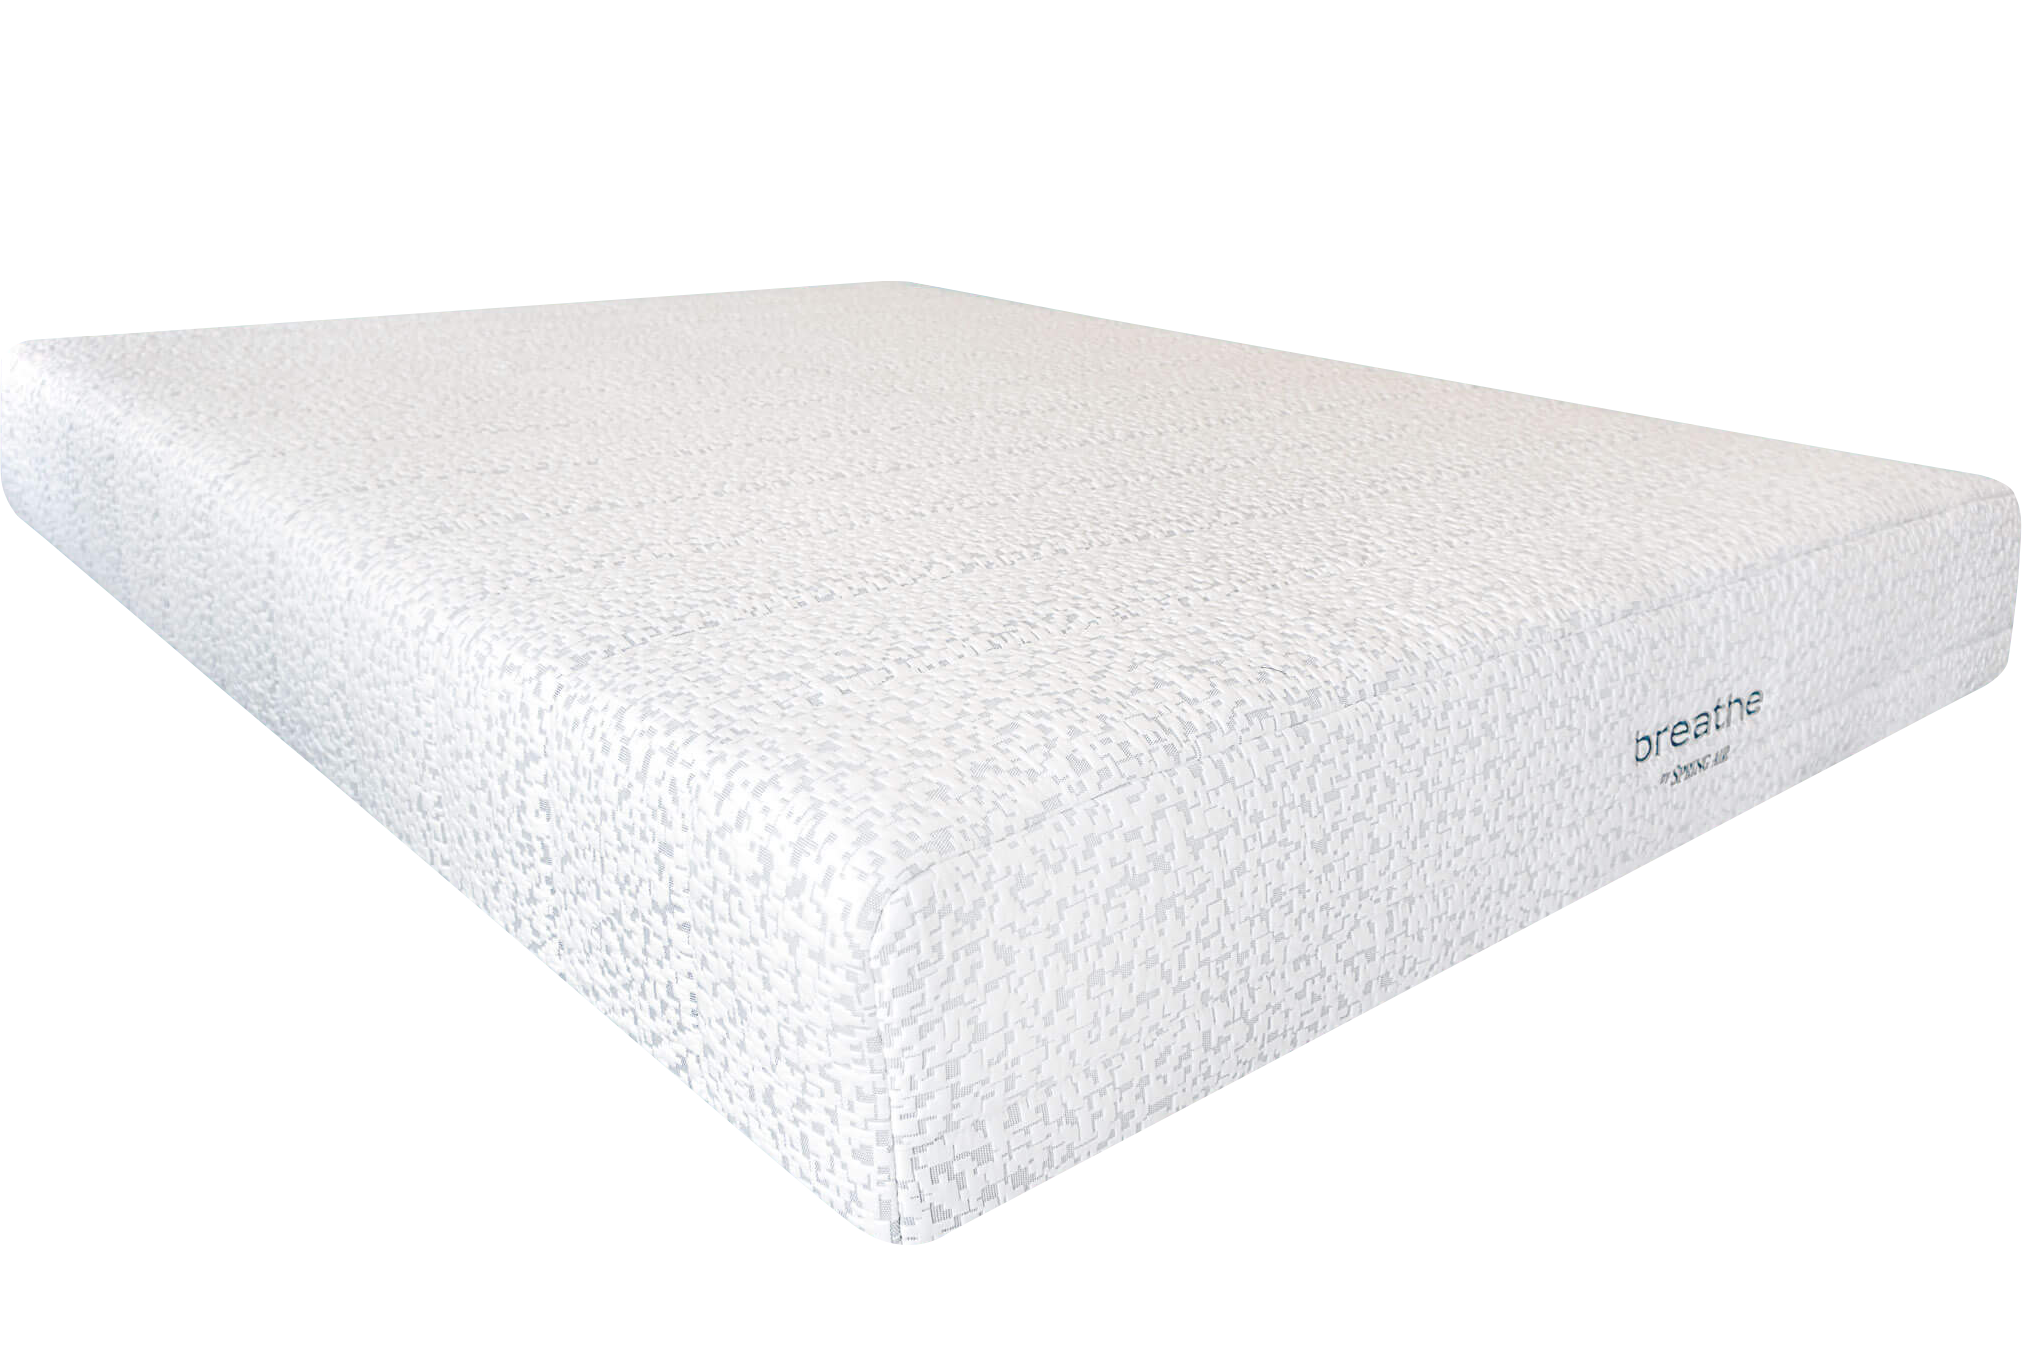 sears memorial day sale memory foam mattress